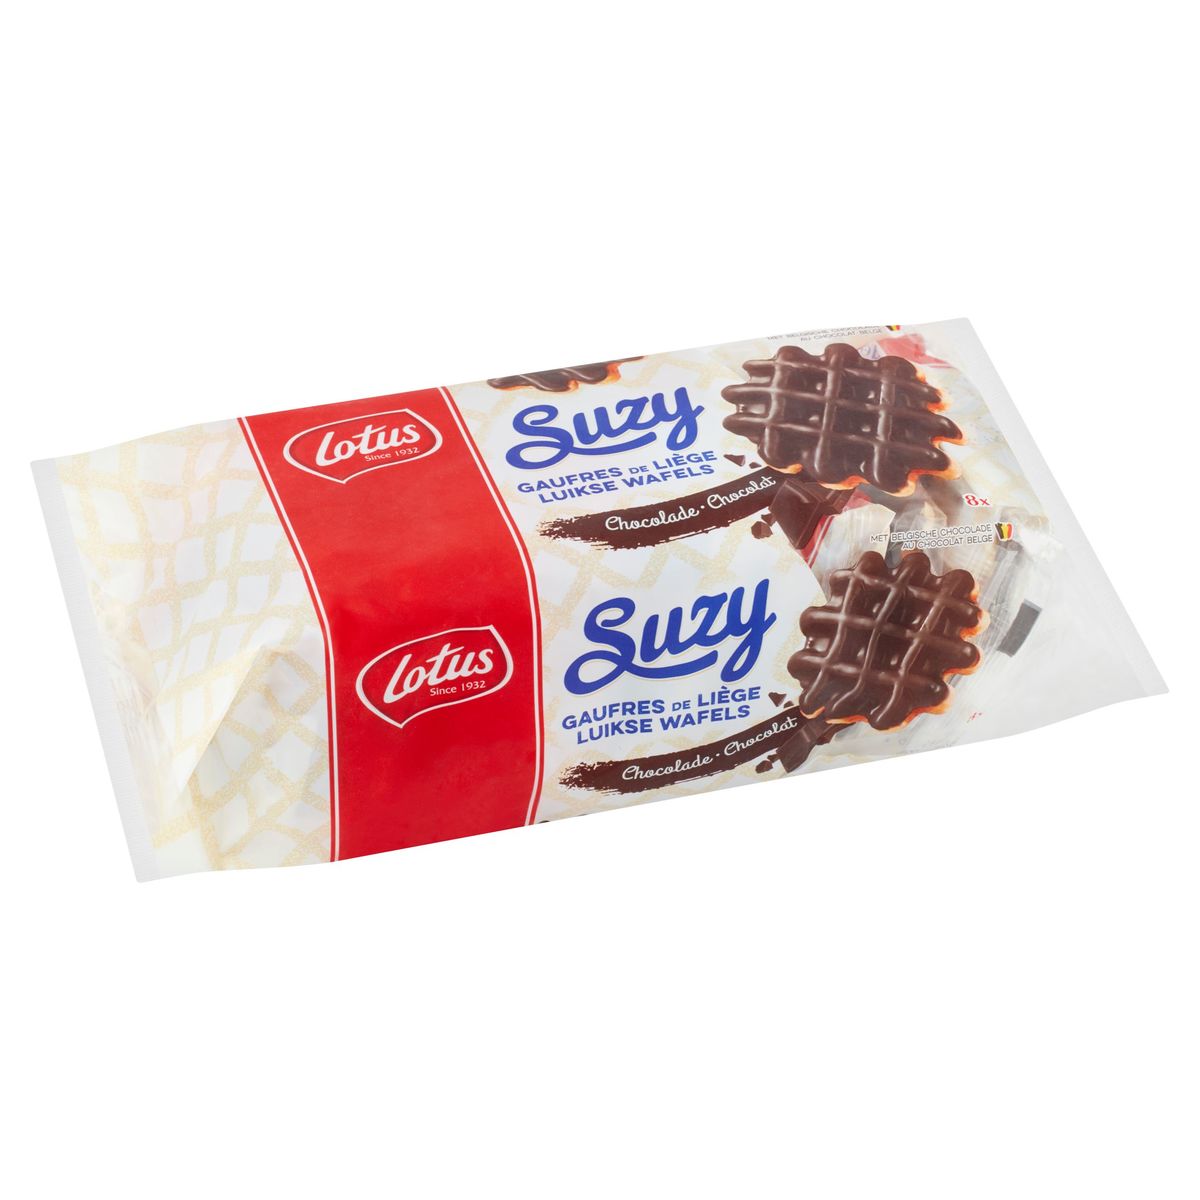 Lotus Suzy Luikse Wafels Chocolade 8 x 57.5 g